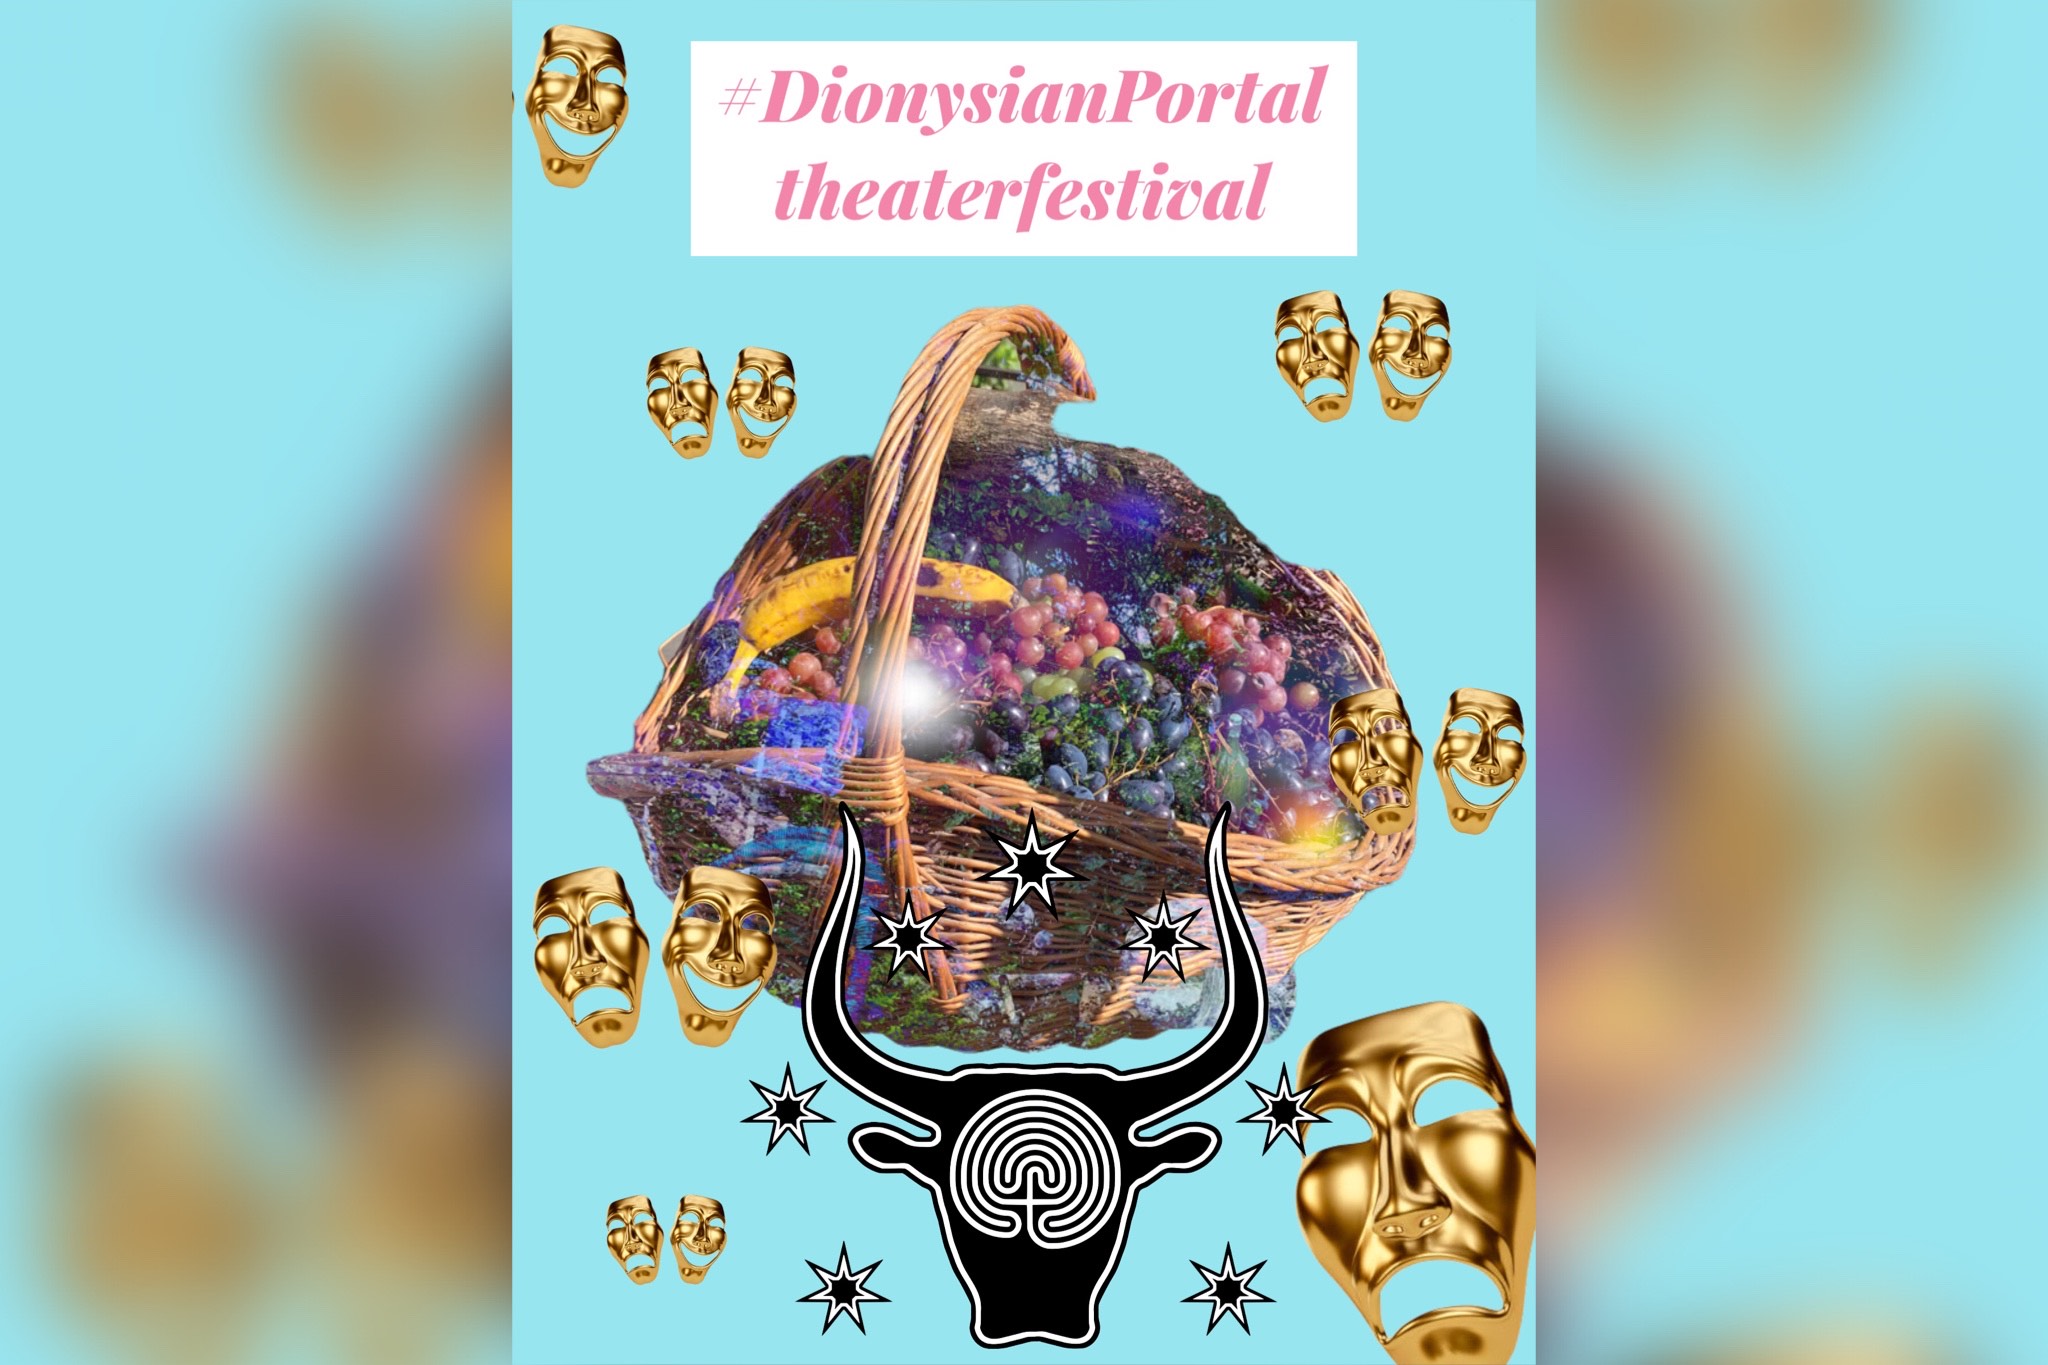 The Dionysian Portal: Een Theaterfestival